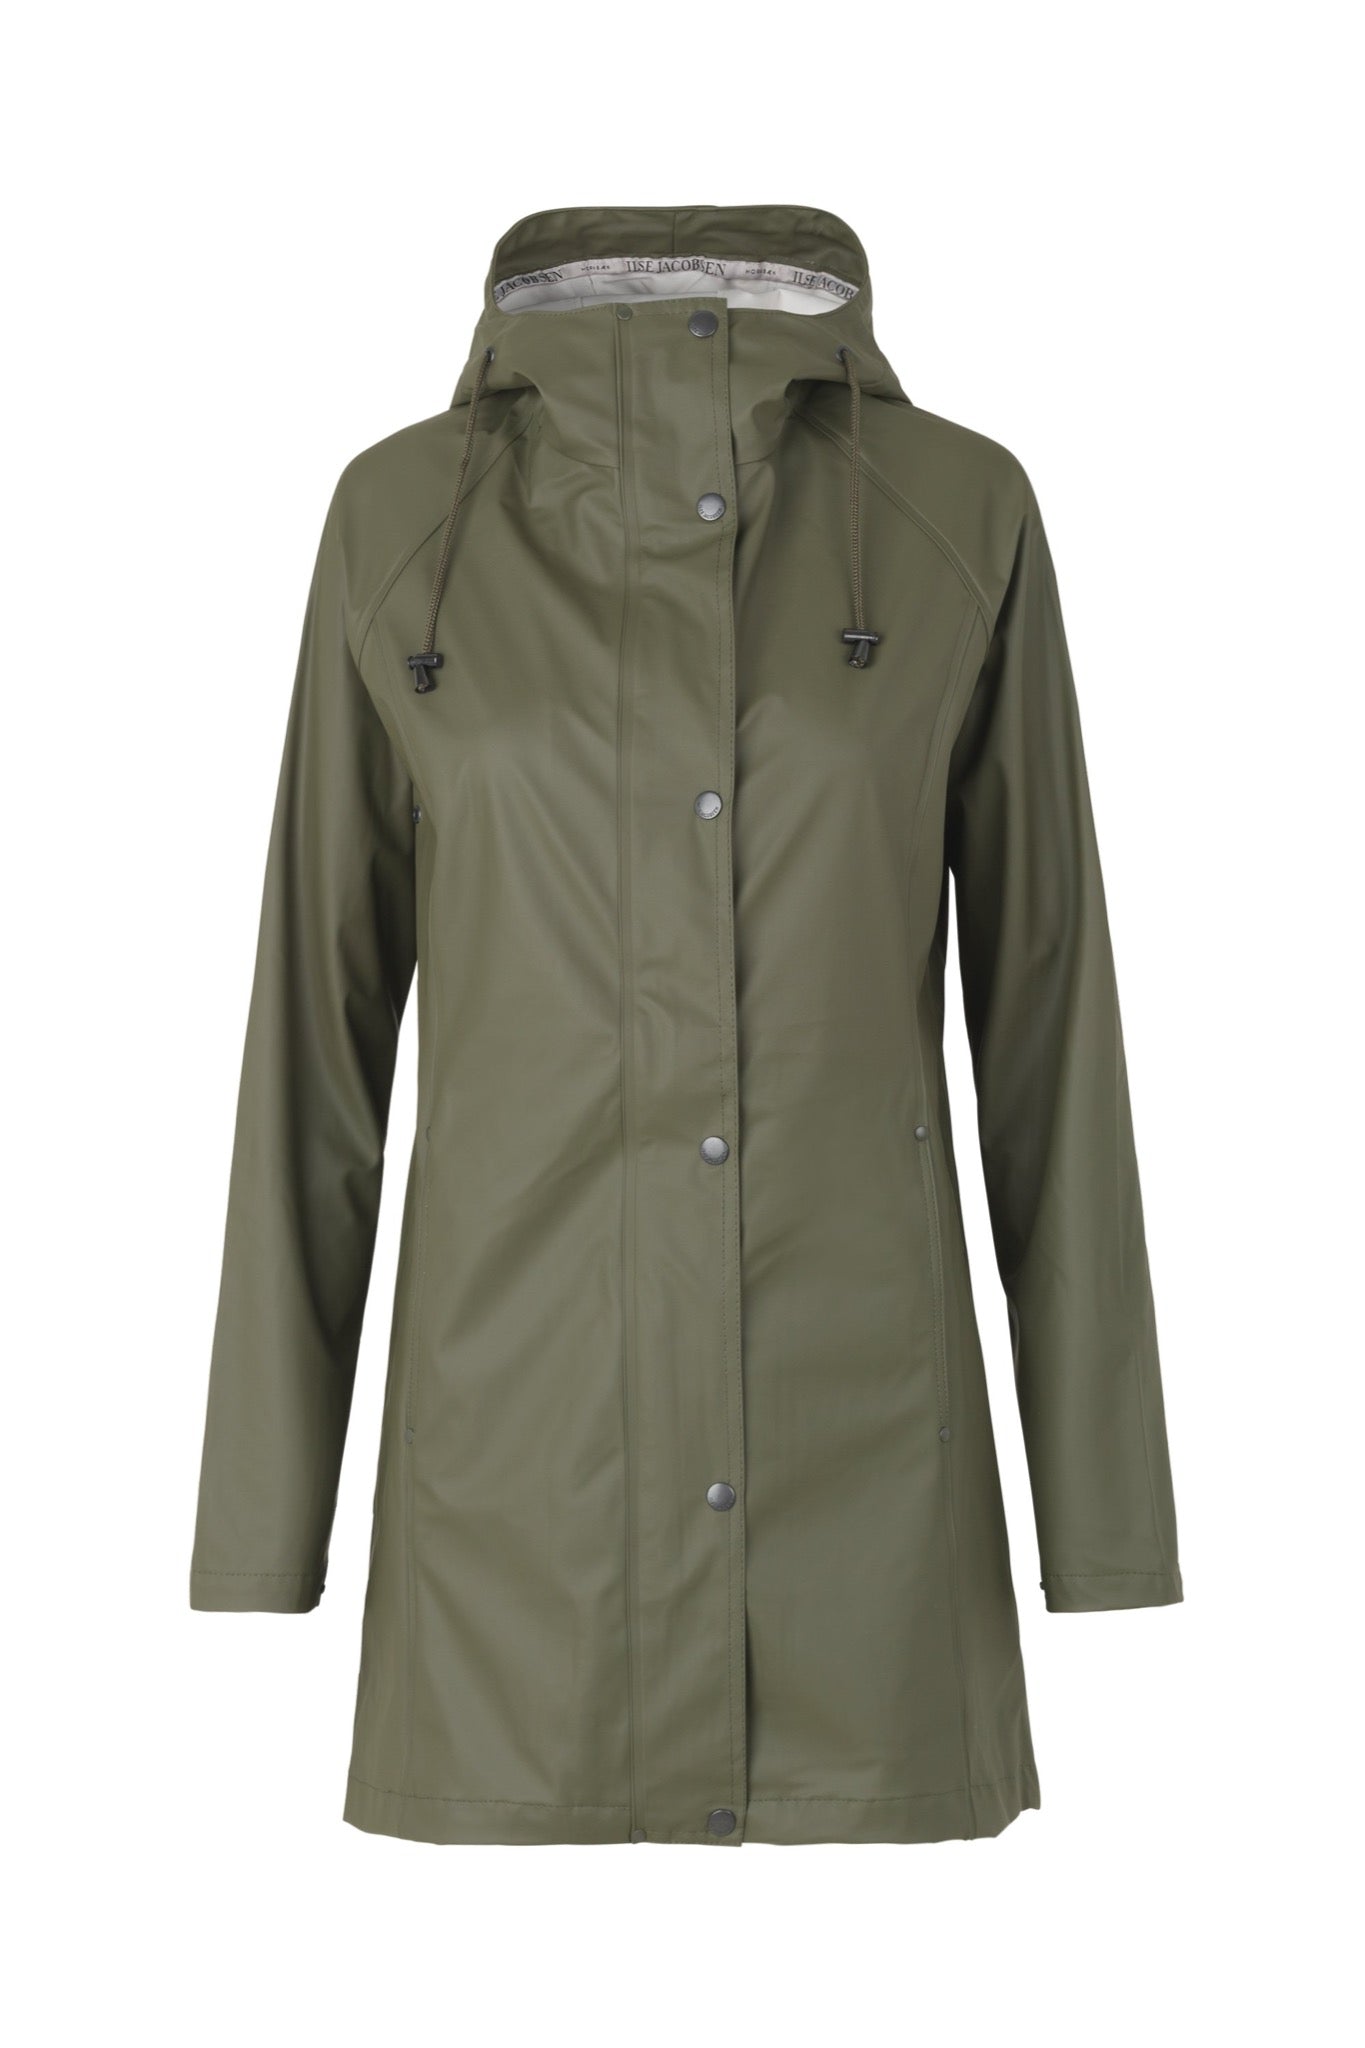 Ilse Jacobsen RAIN87 mid length hooded rain coat in Army - khaki green.